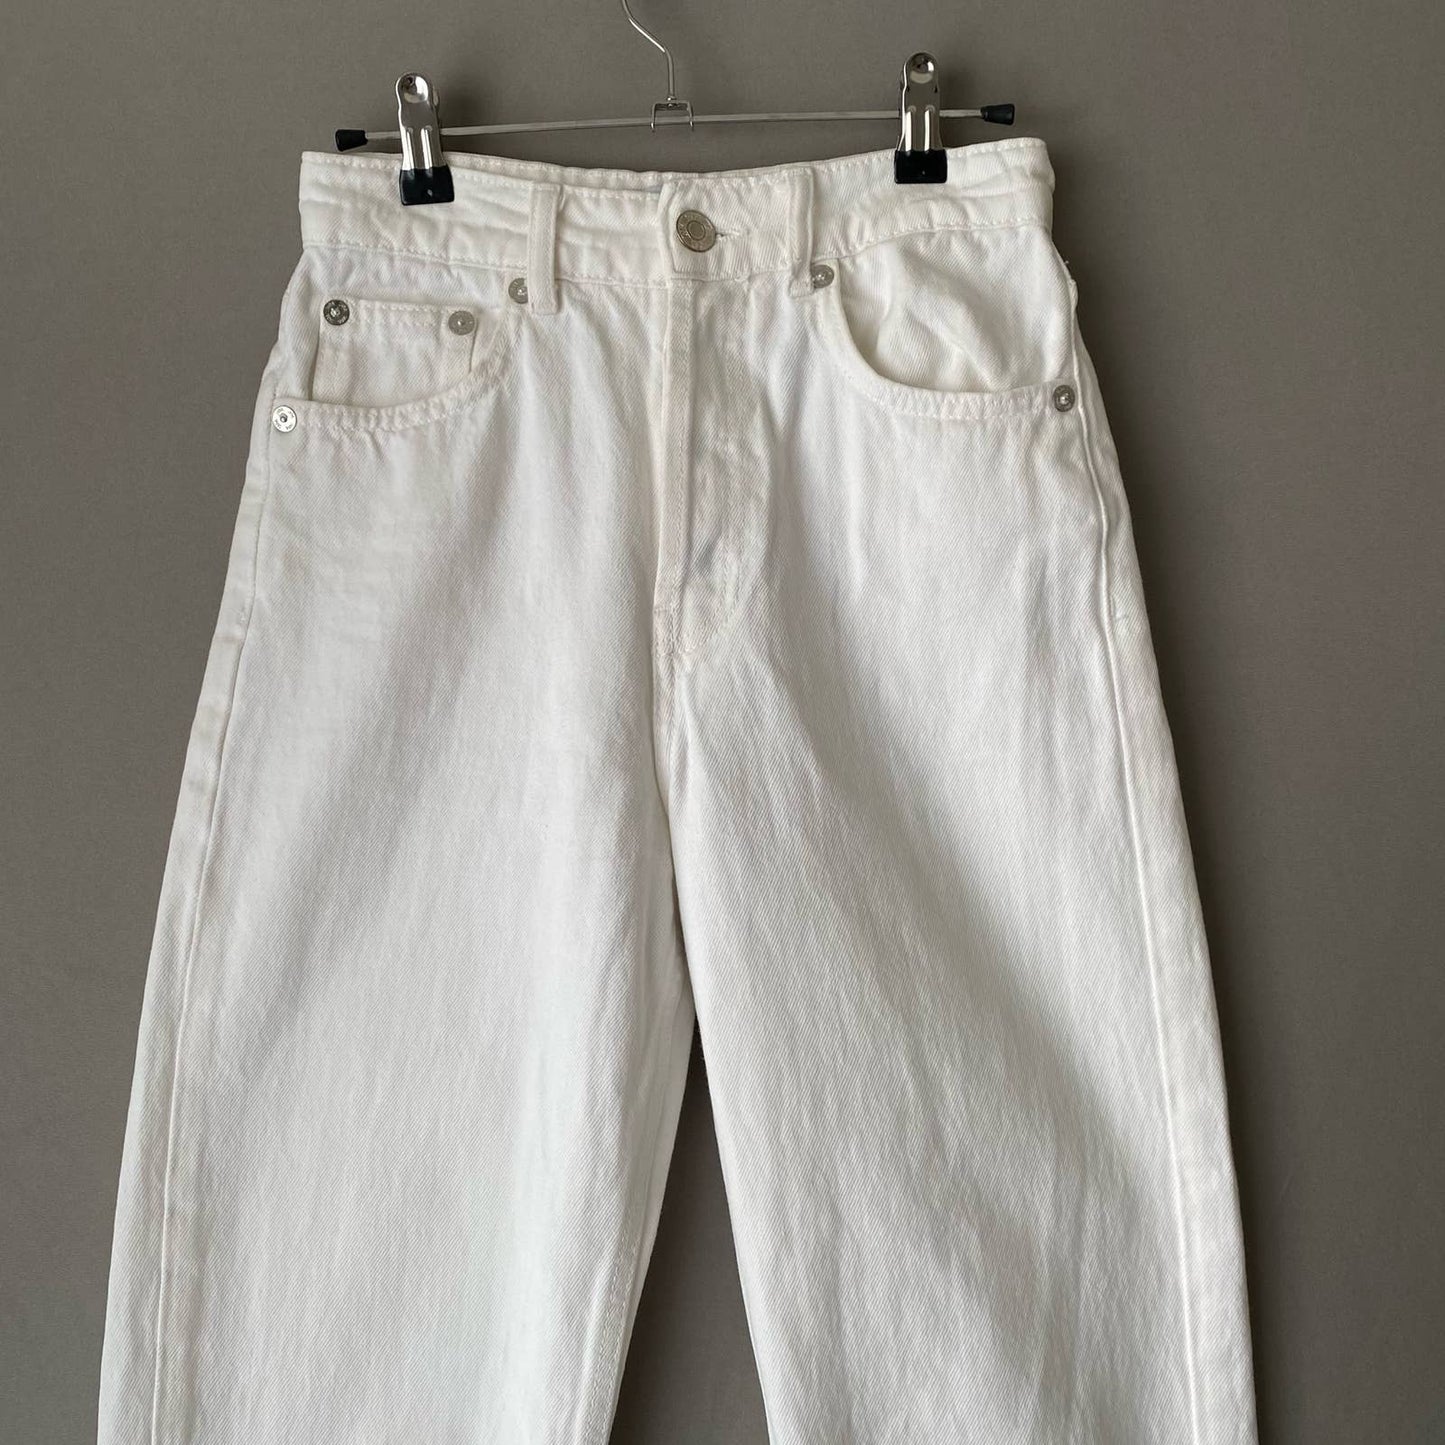 Zara sz 2 high rise cut off hem white jeans